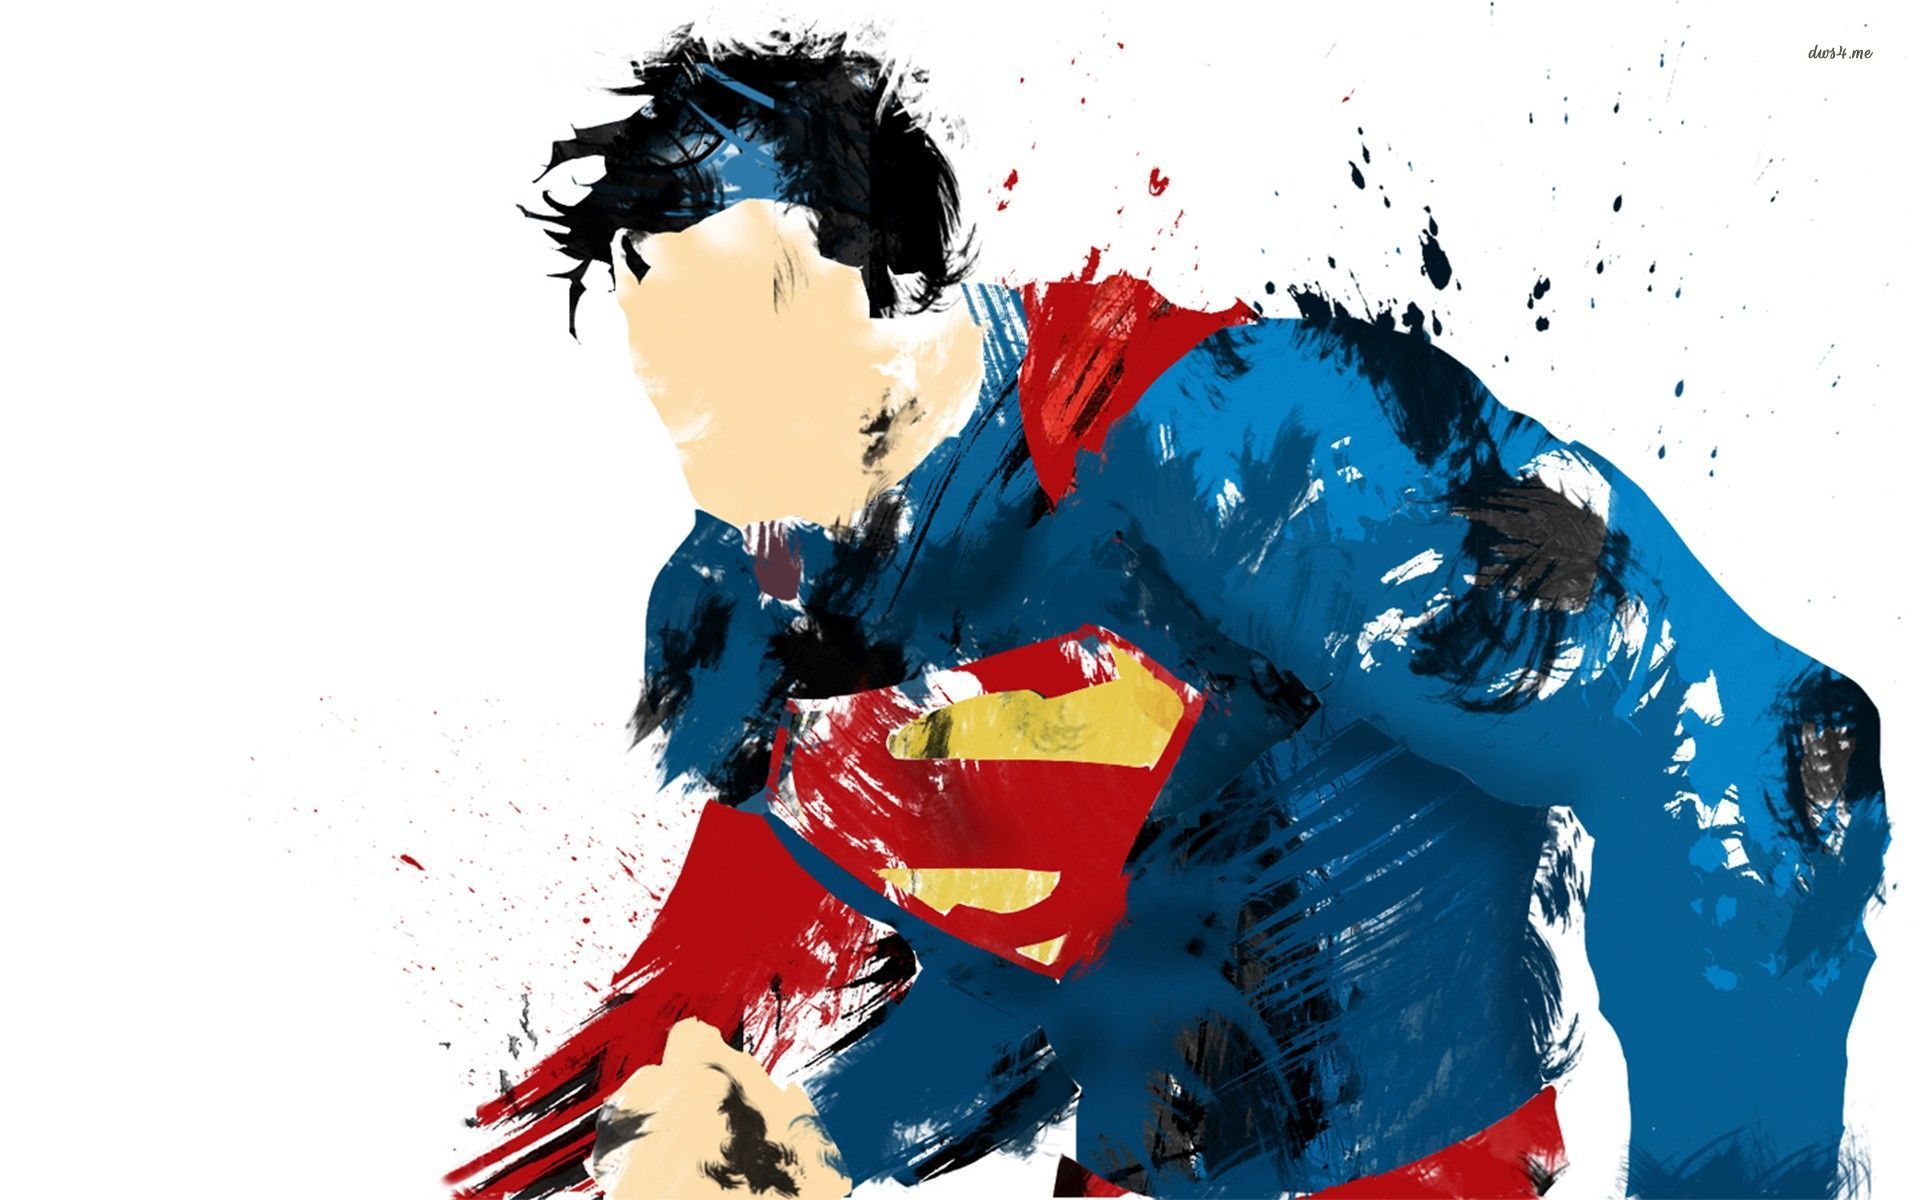 Best Superman HD Wallpaper For Desktop